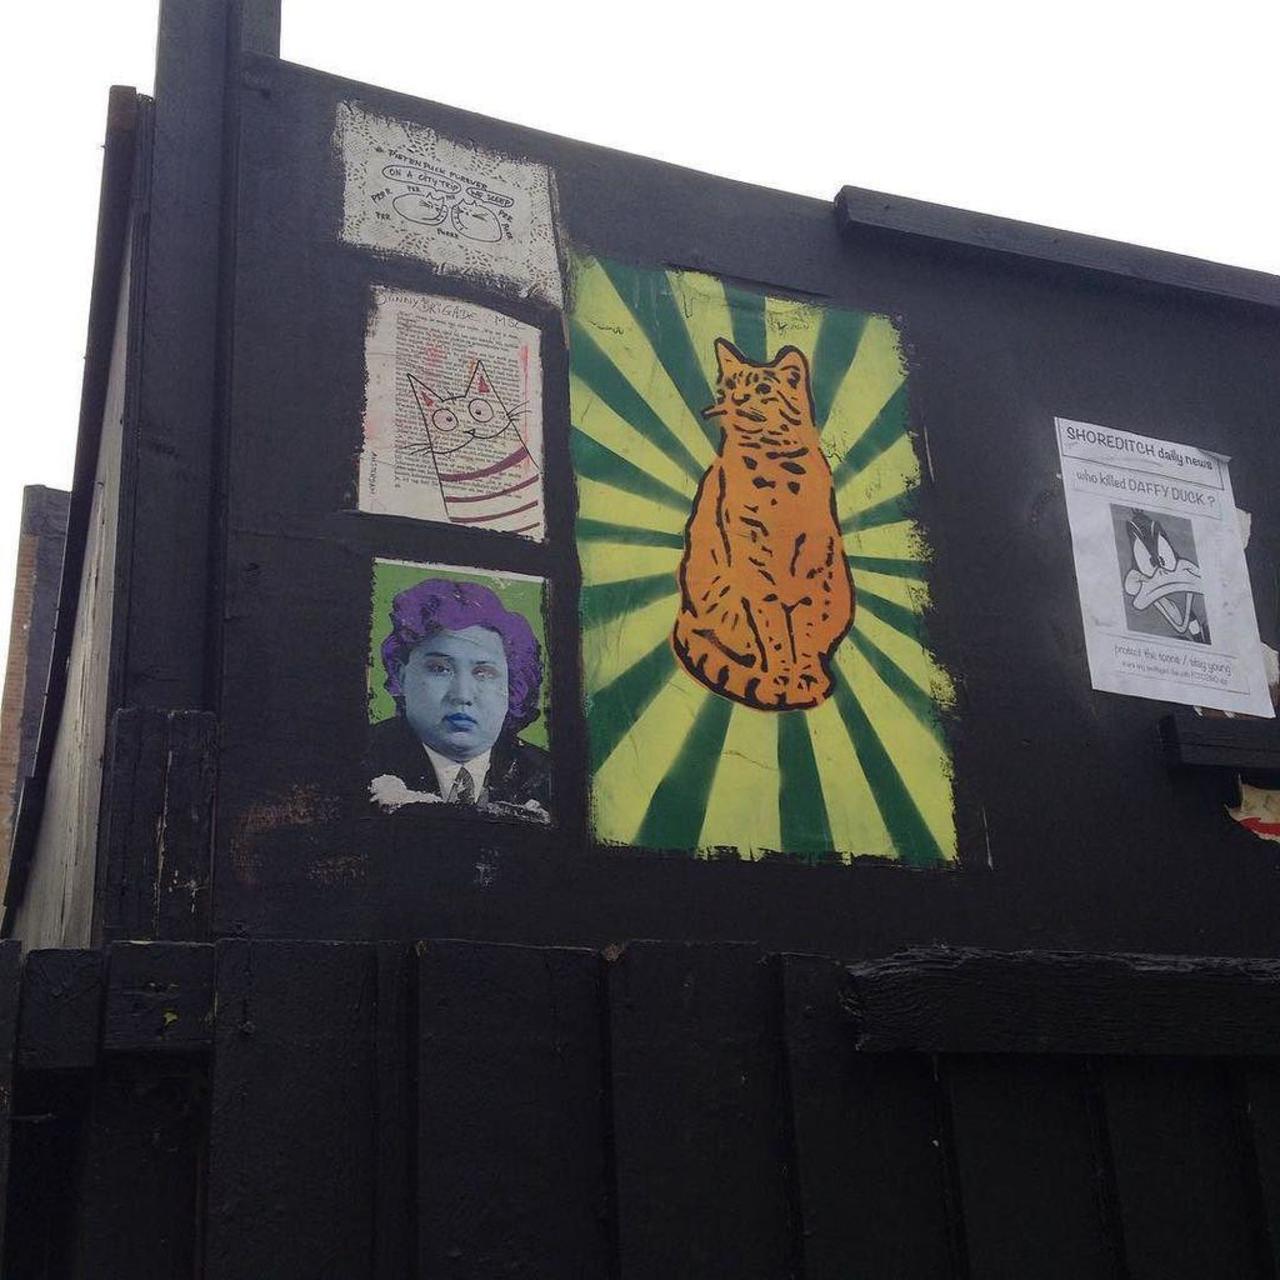 Puss. #streetart #streetartlondon #graffiti #london #thisislondon by isadarko http://t.co/NlXXF8rqnP